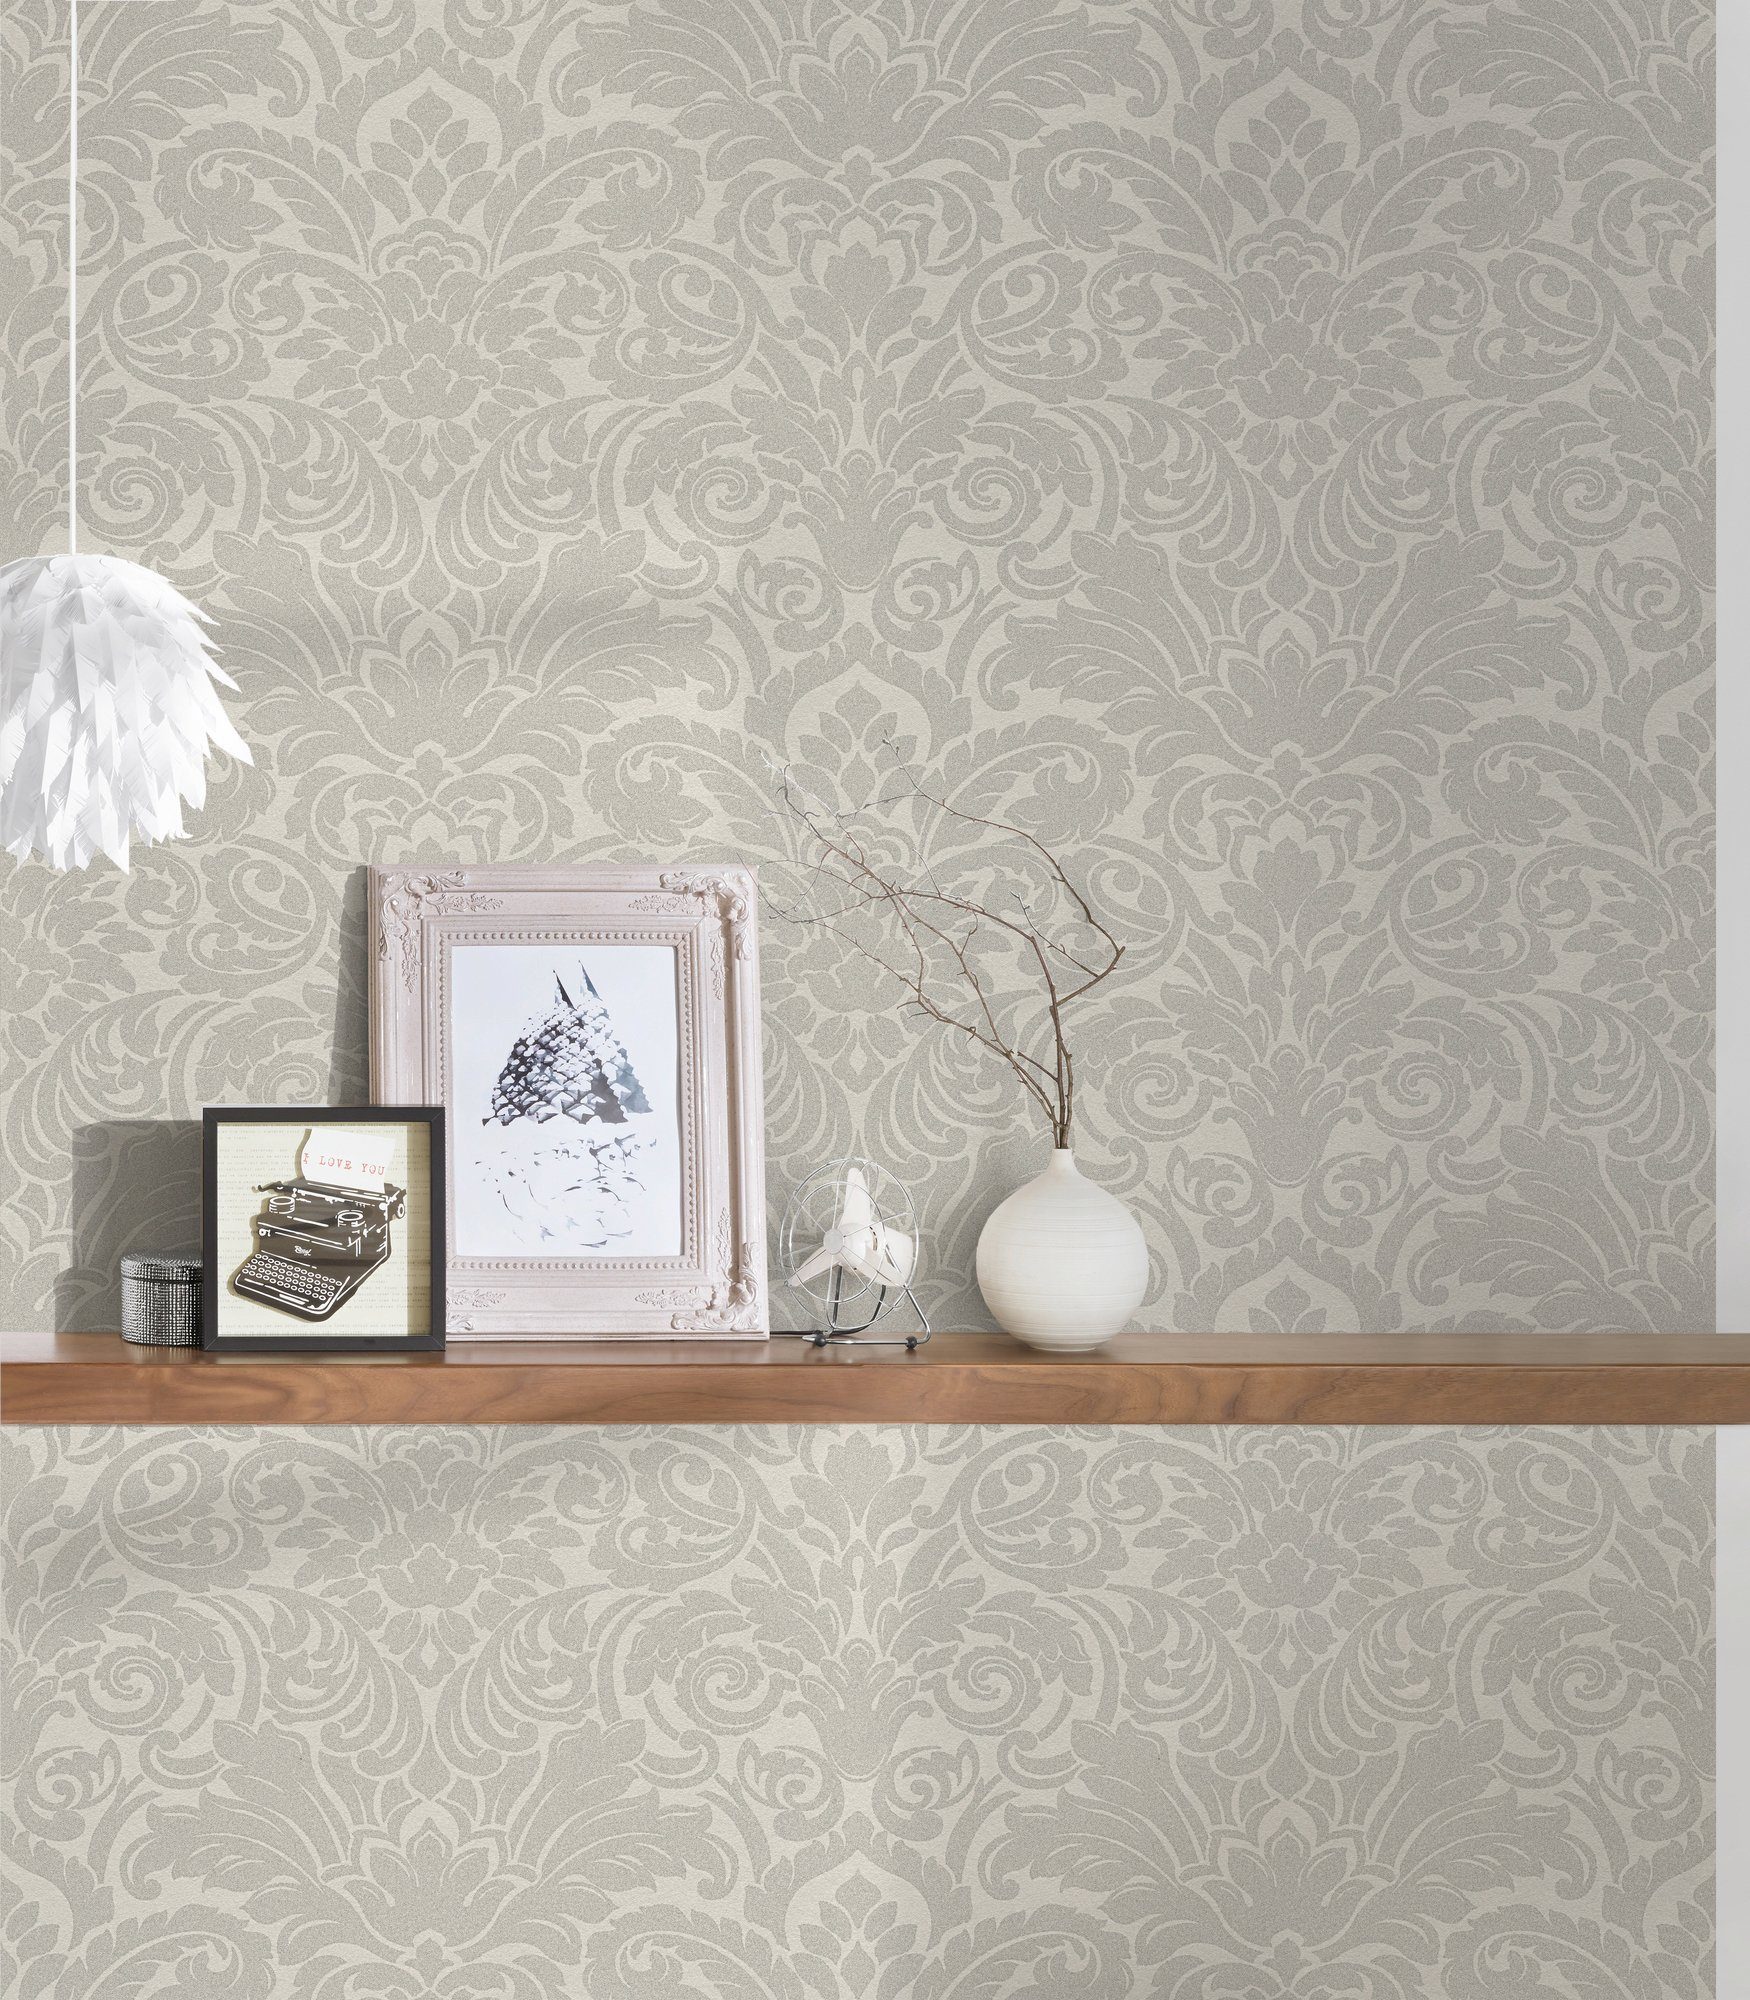 wallpaper, Barock, Barock Vliestapete A.S. Architects Luxury silberfarben/creme strukturiert, Tapete Création Paper Ornament